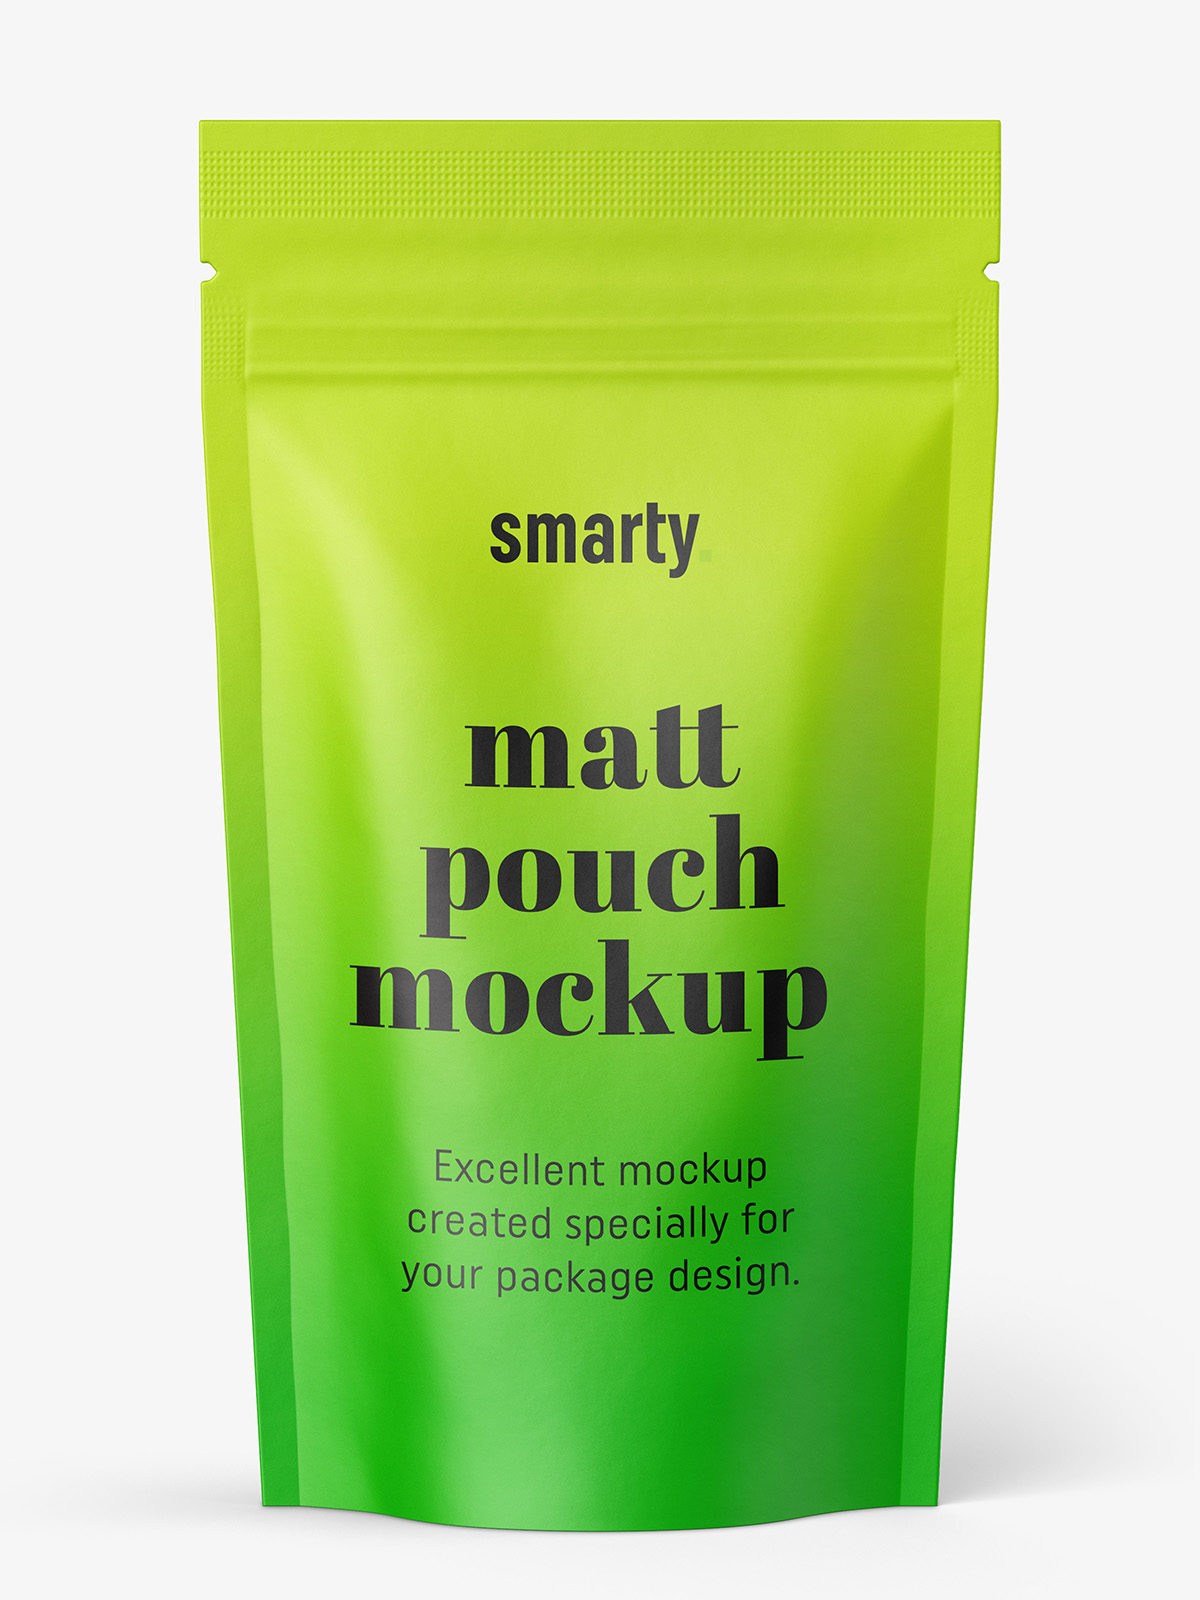 Download Matt pouch mockup - Smarty Mockups